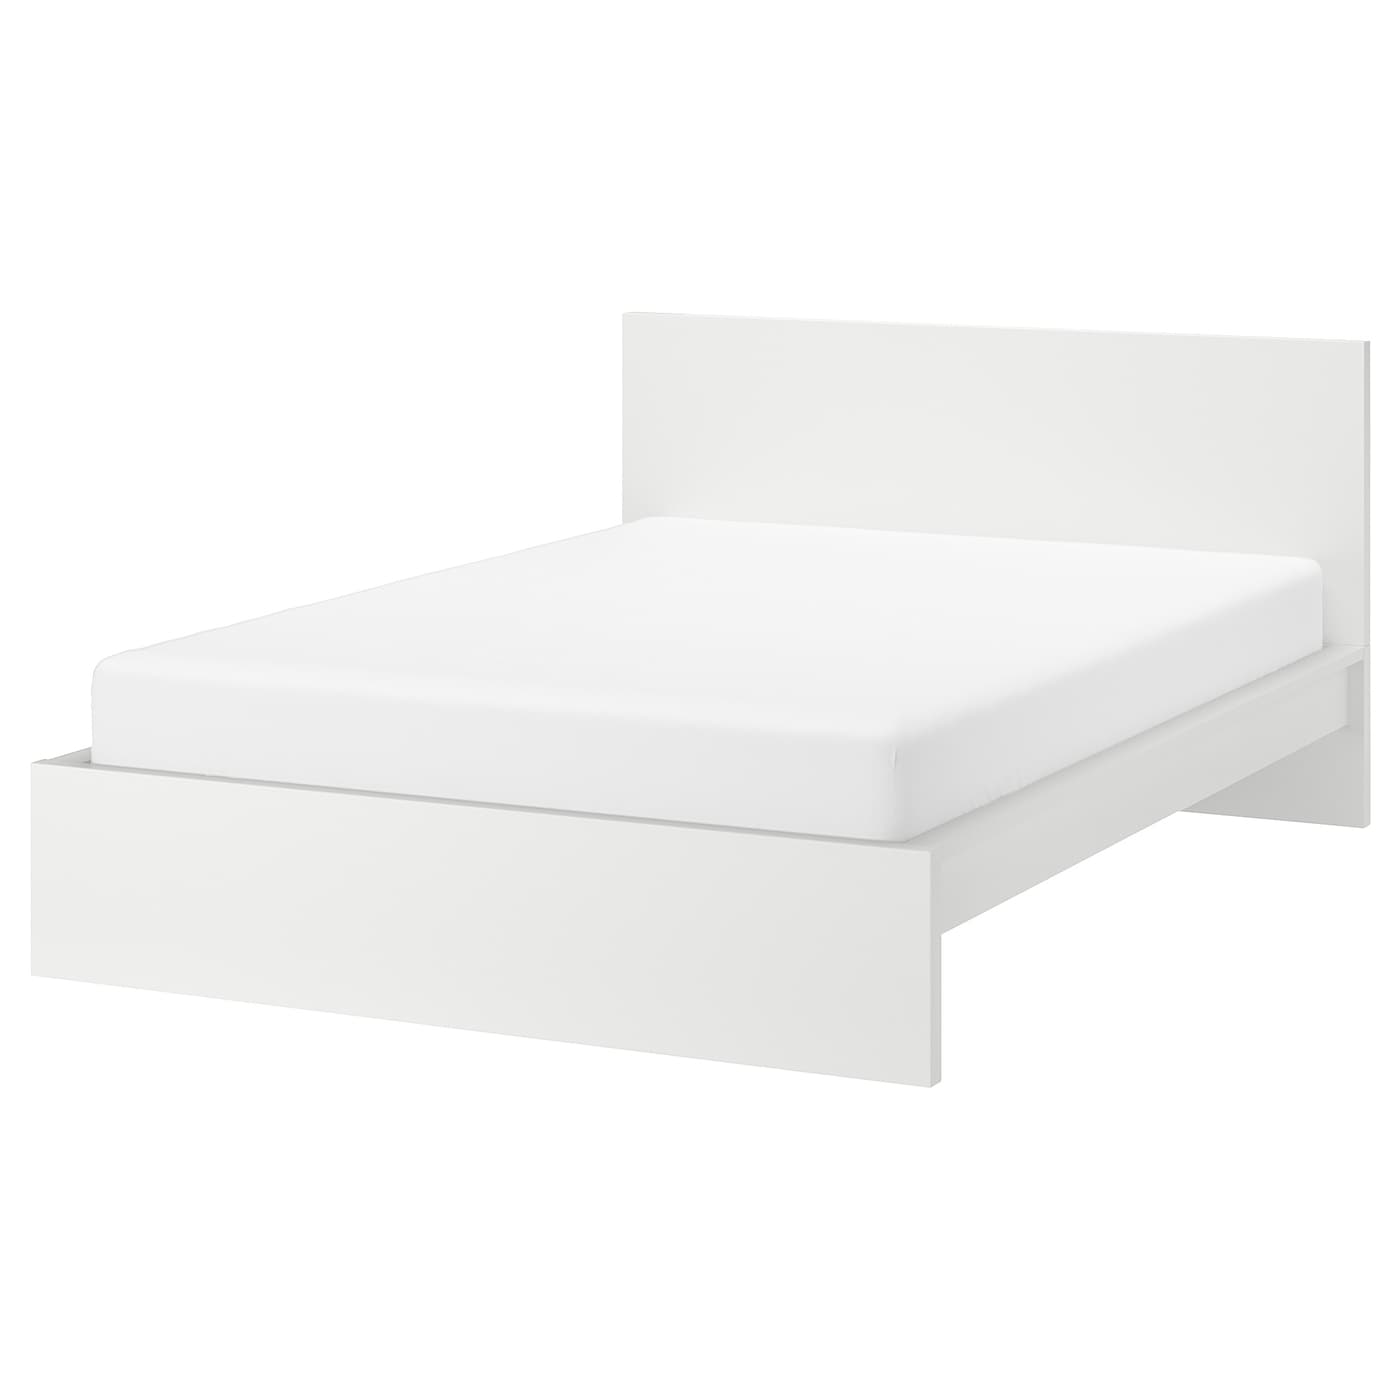 Каркас кровати - IKEA MALM, 200х160 см, белый, МАЛЬМ ИКЕА